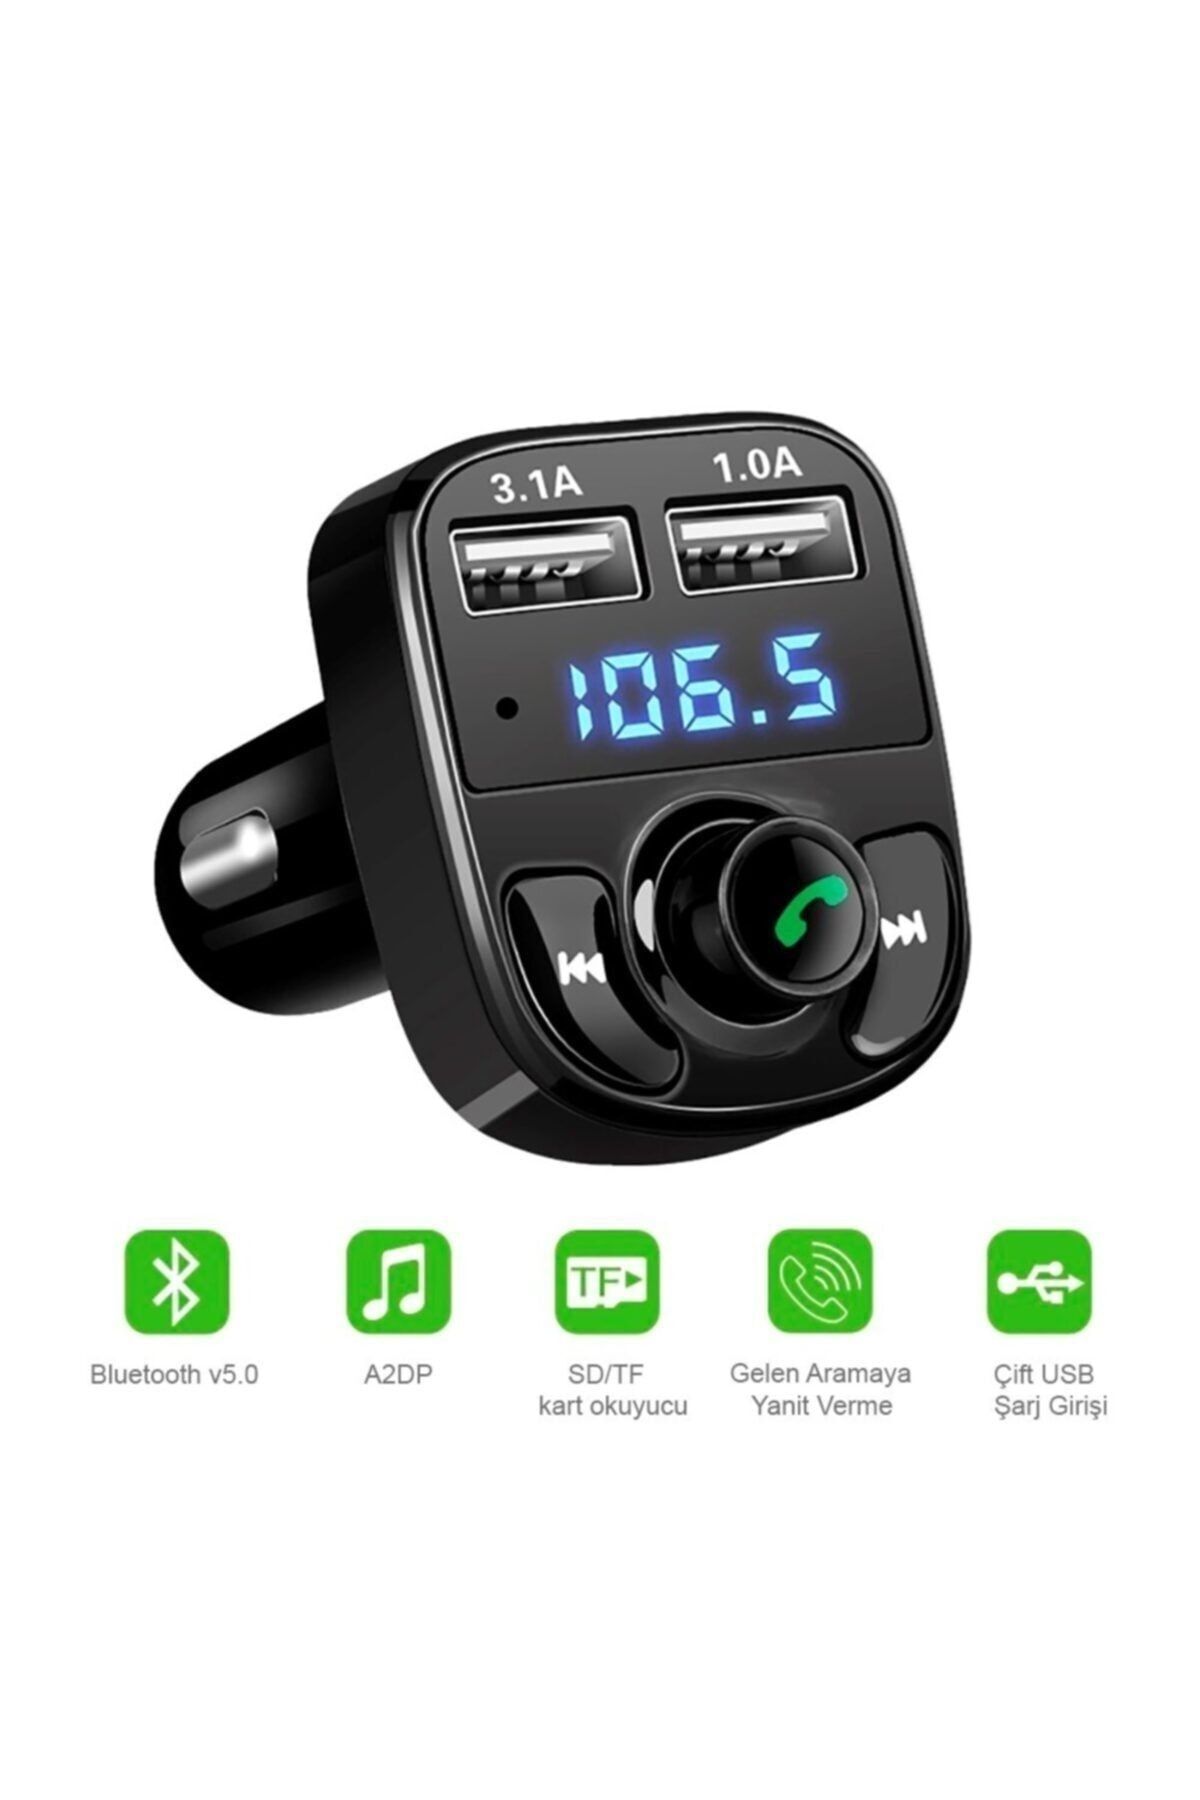 MEZİGARC Universal Bluetooth Araç Kiti Çakmaklık Şarj Cihazı Fm Transmitter Cihazı Araba Müzik Oto Mp3 Çalar